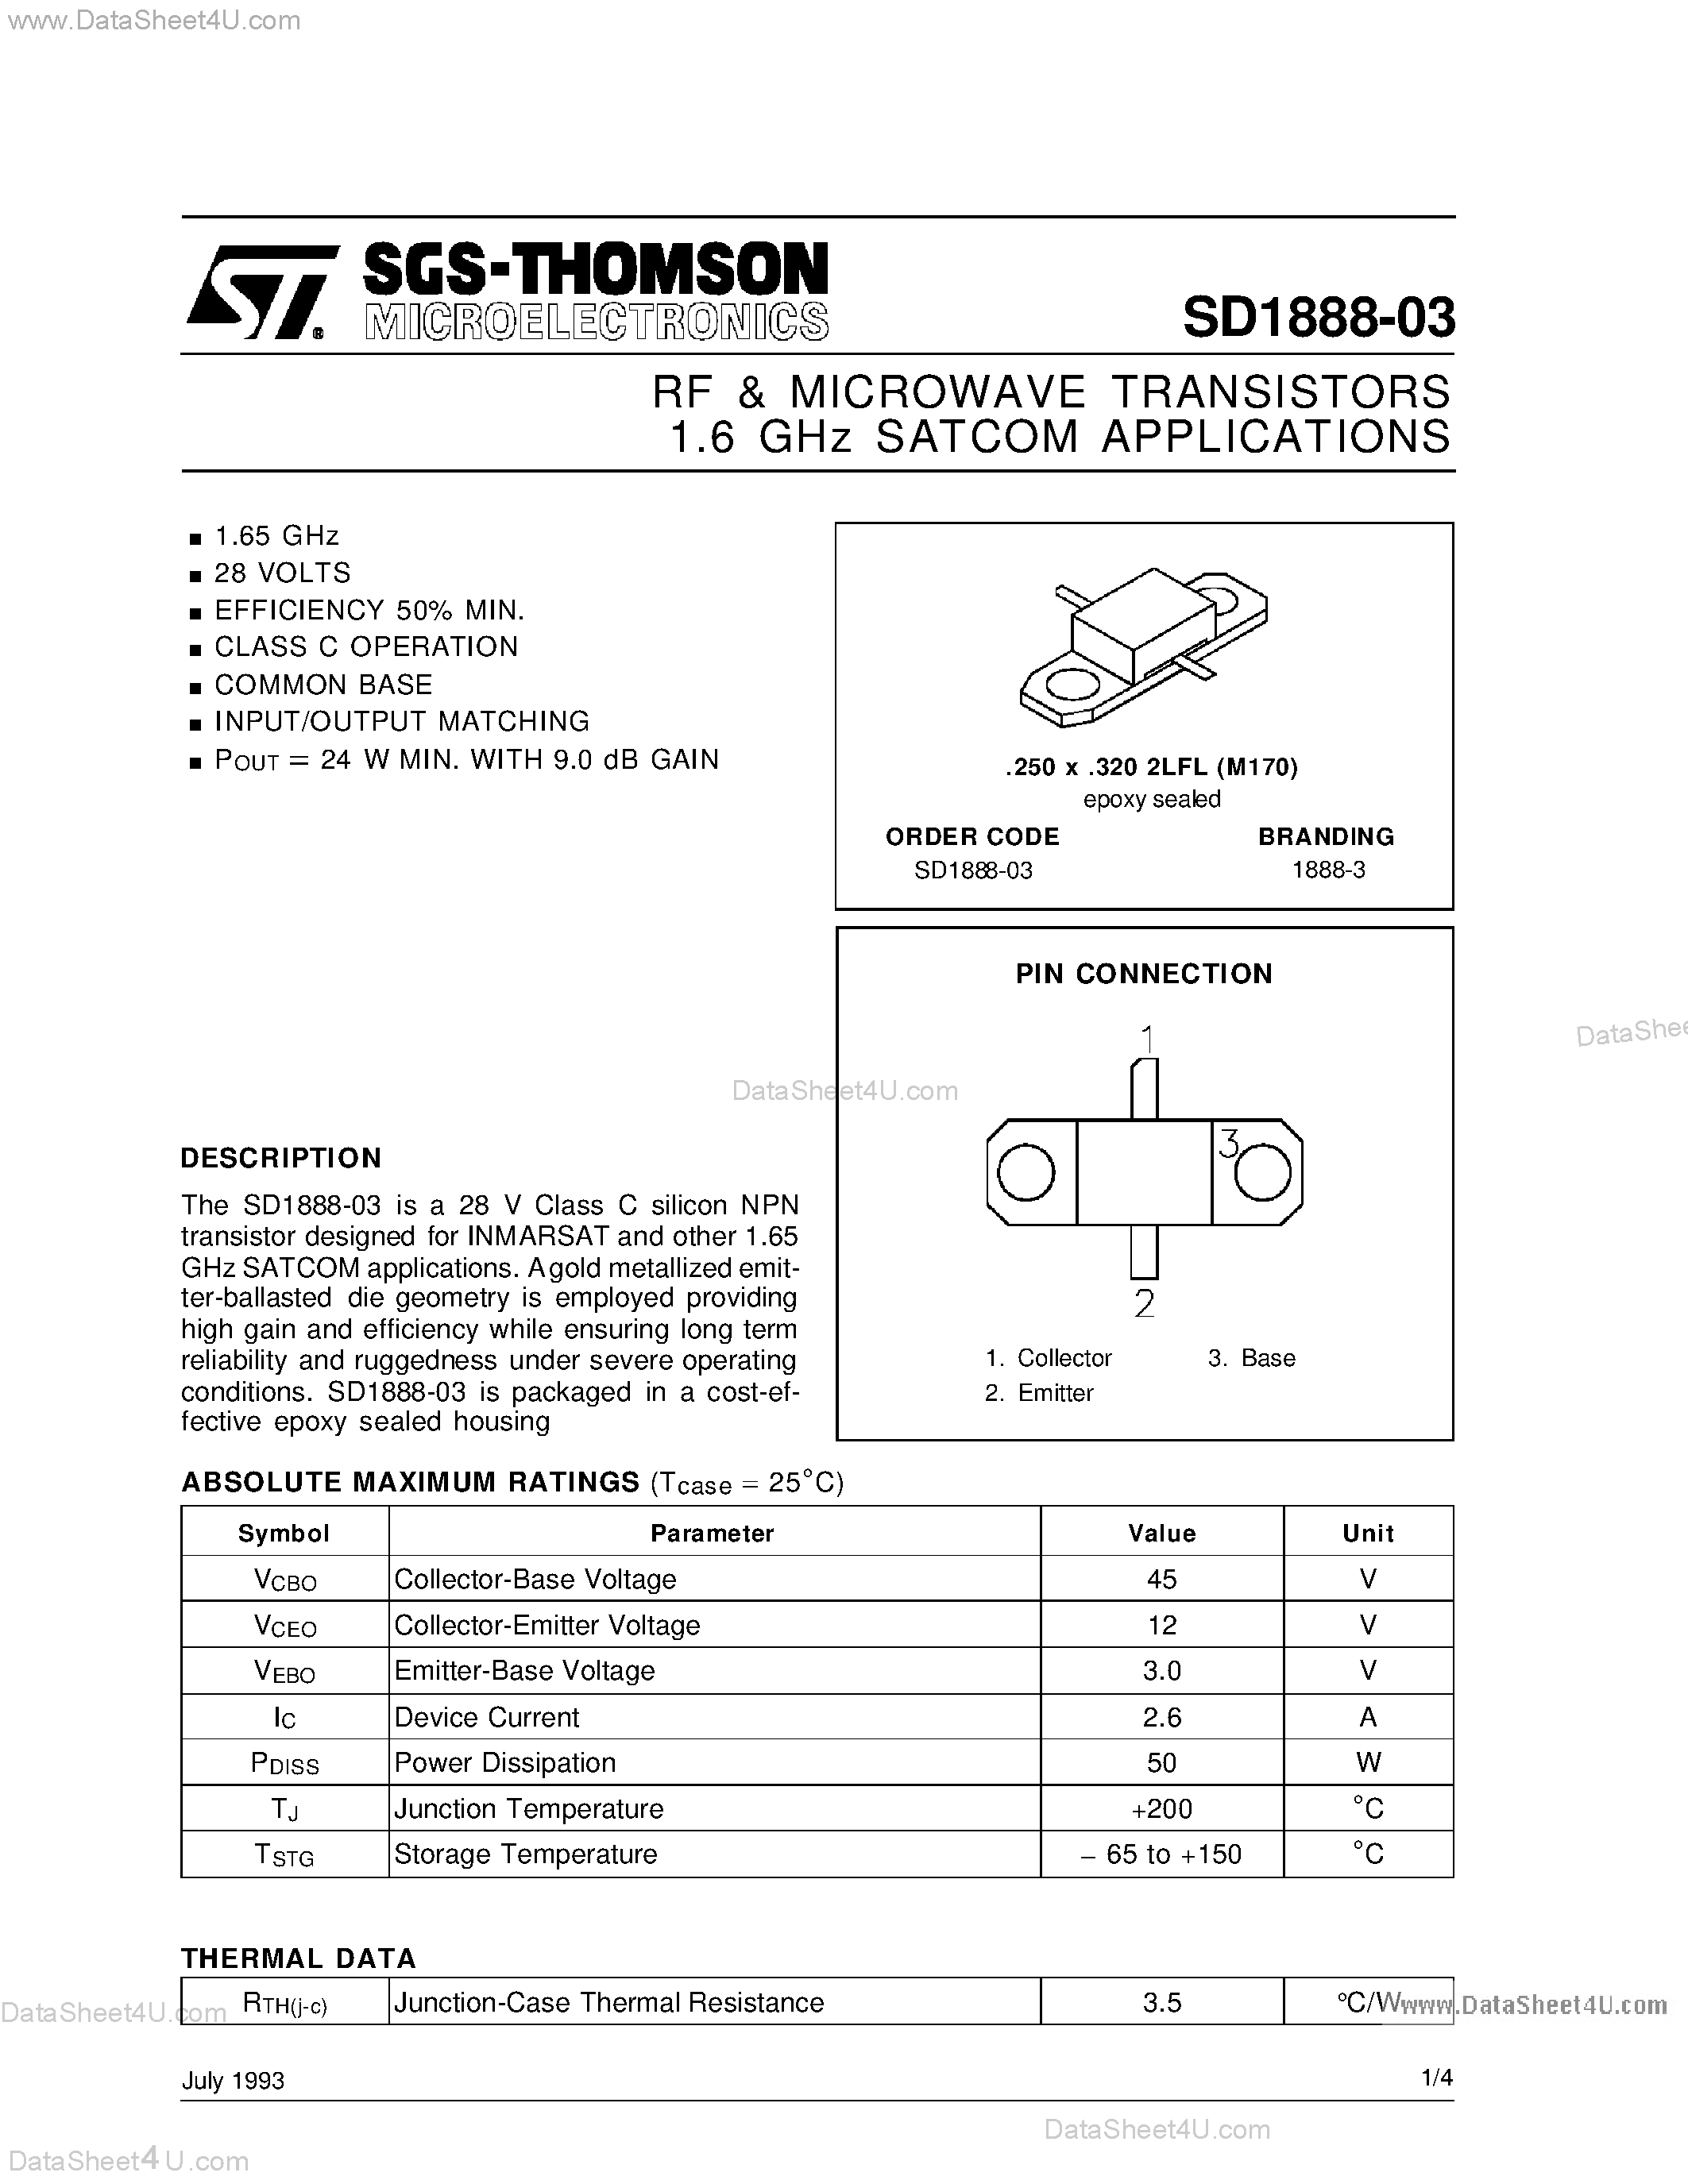 Datasheet SD1888-03 - RF & MICROWAVE TRANSISTORS 1.6 GHz SATCOM APPLICATIONS page 1